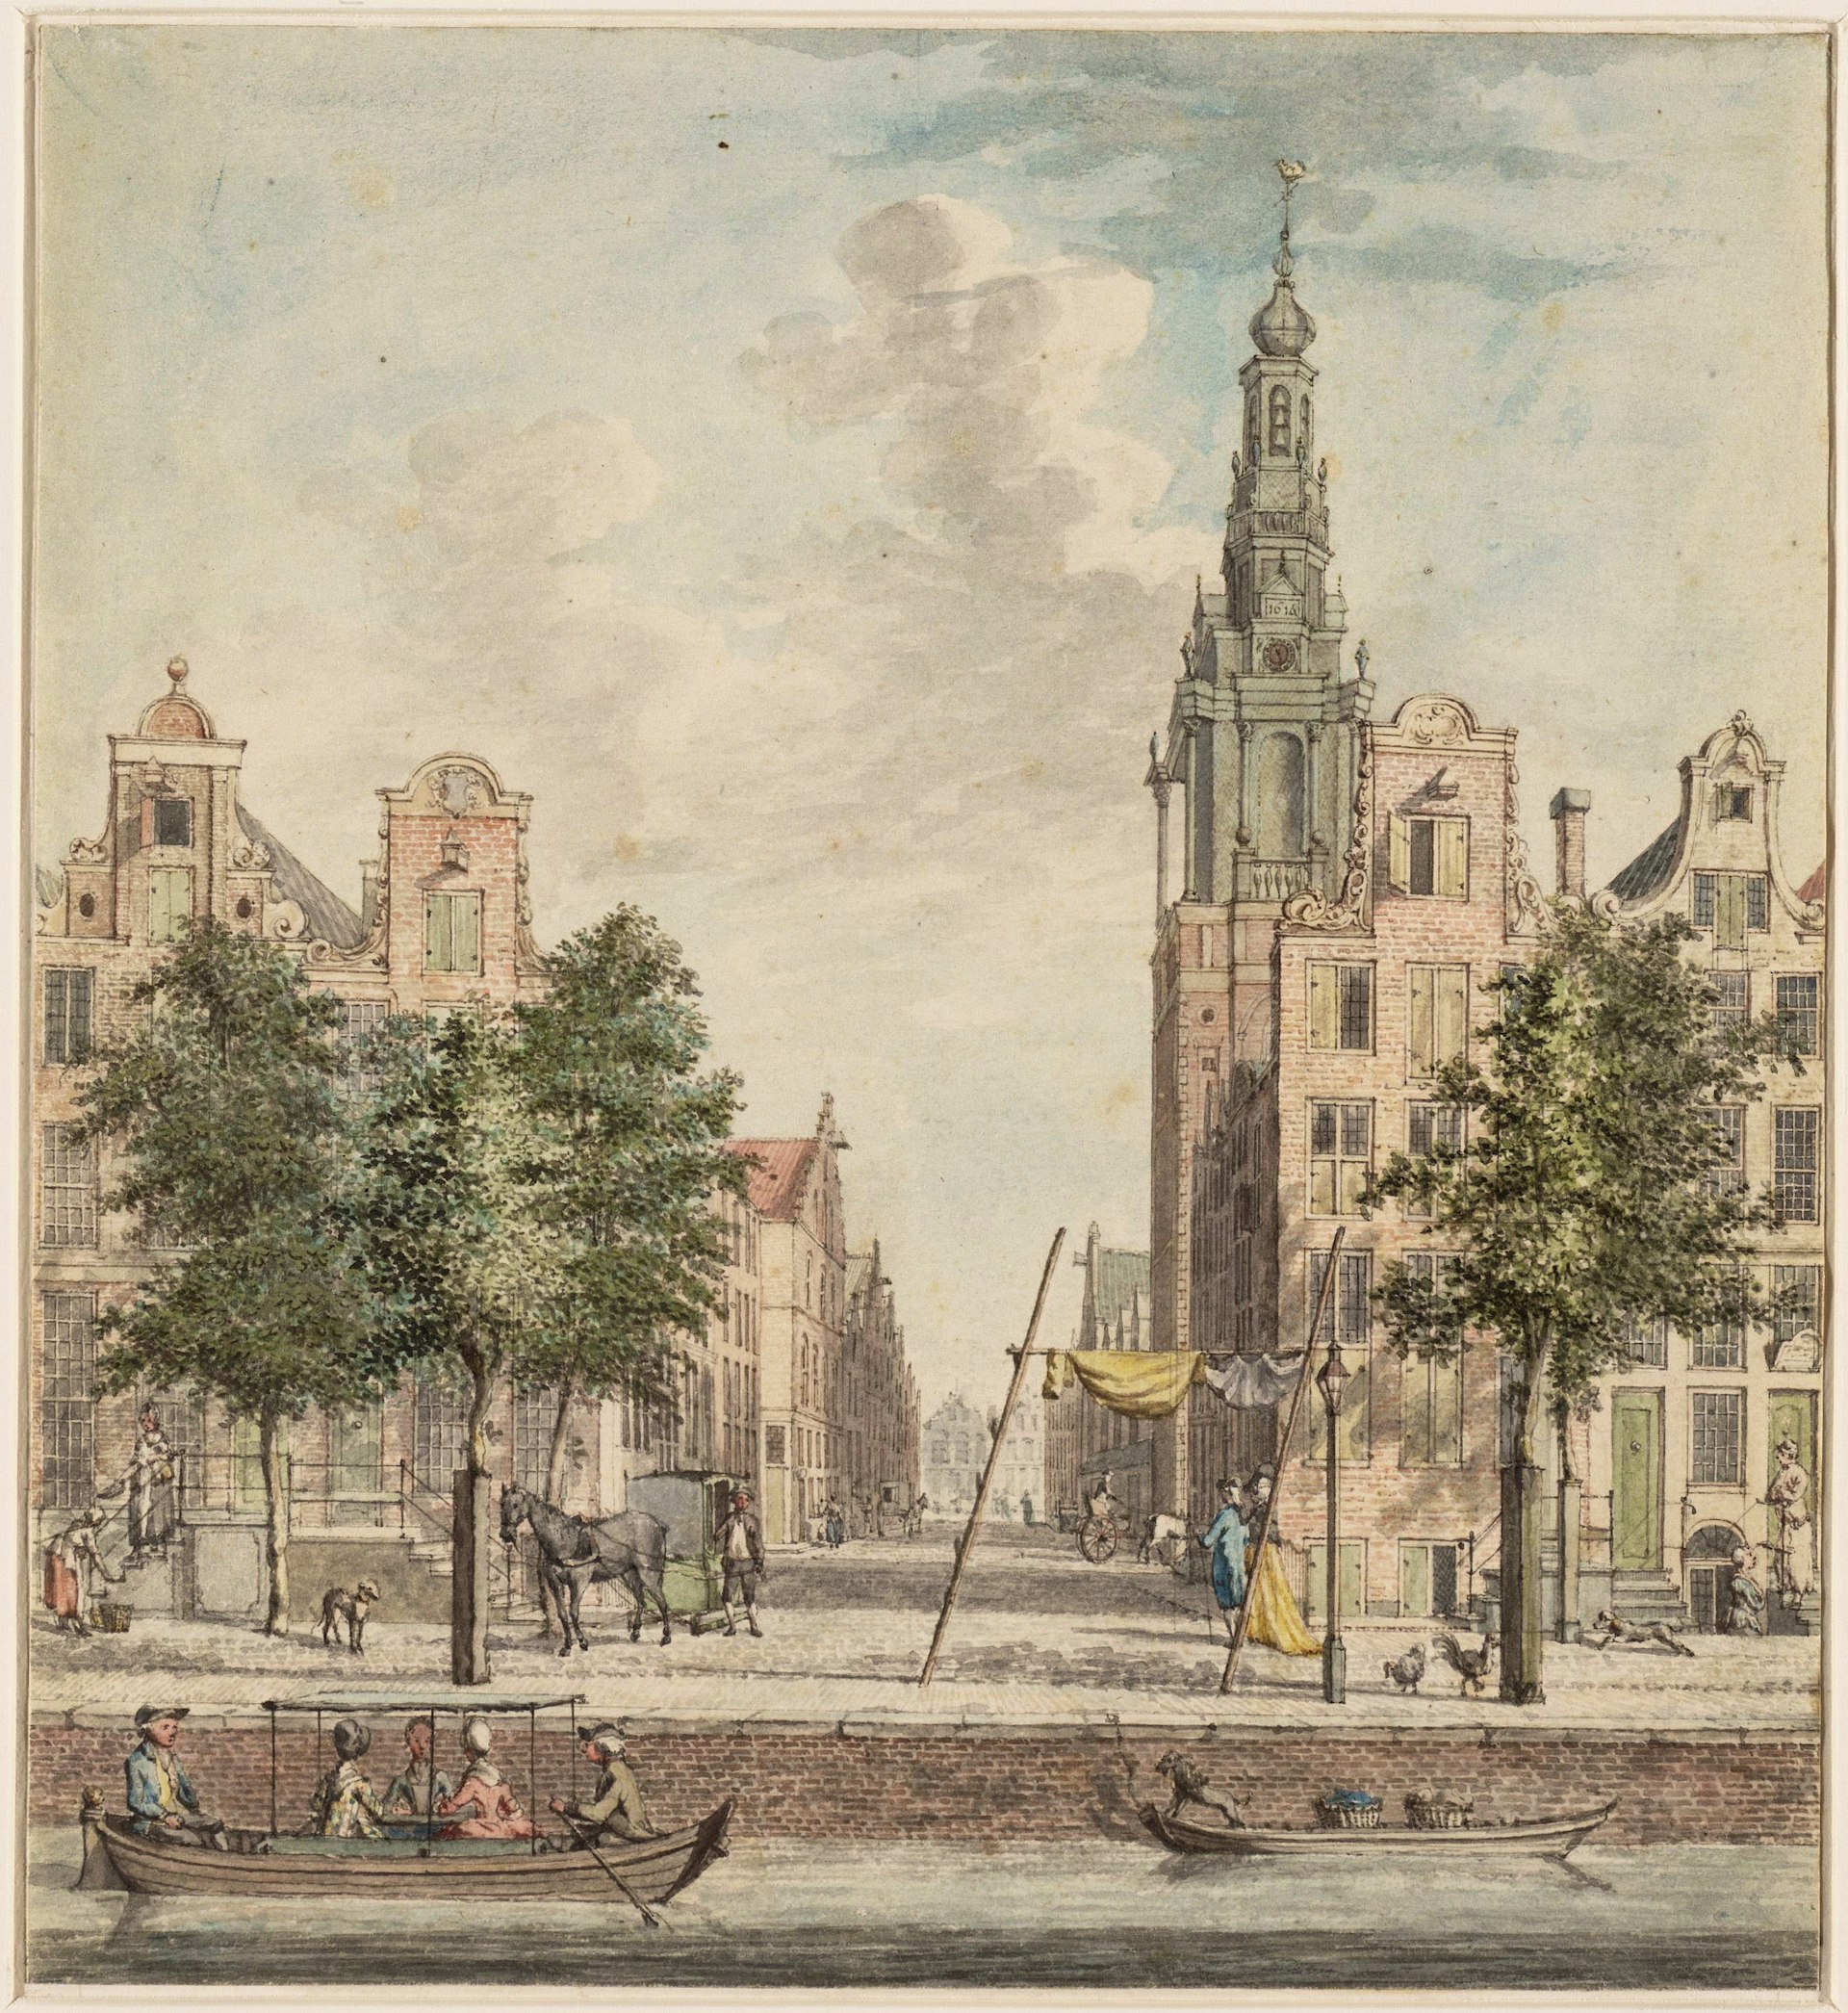 Amsterdams straatleven in de 17e en 18e eeuw